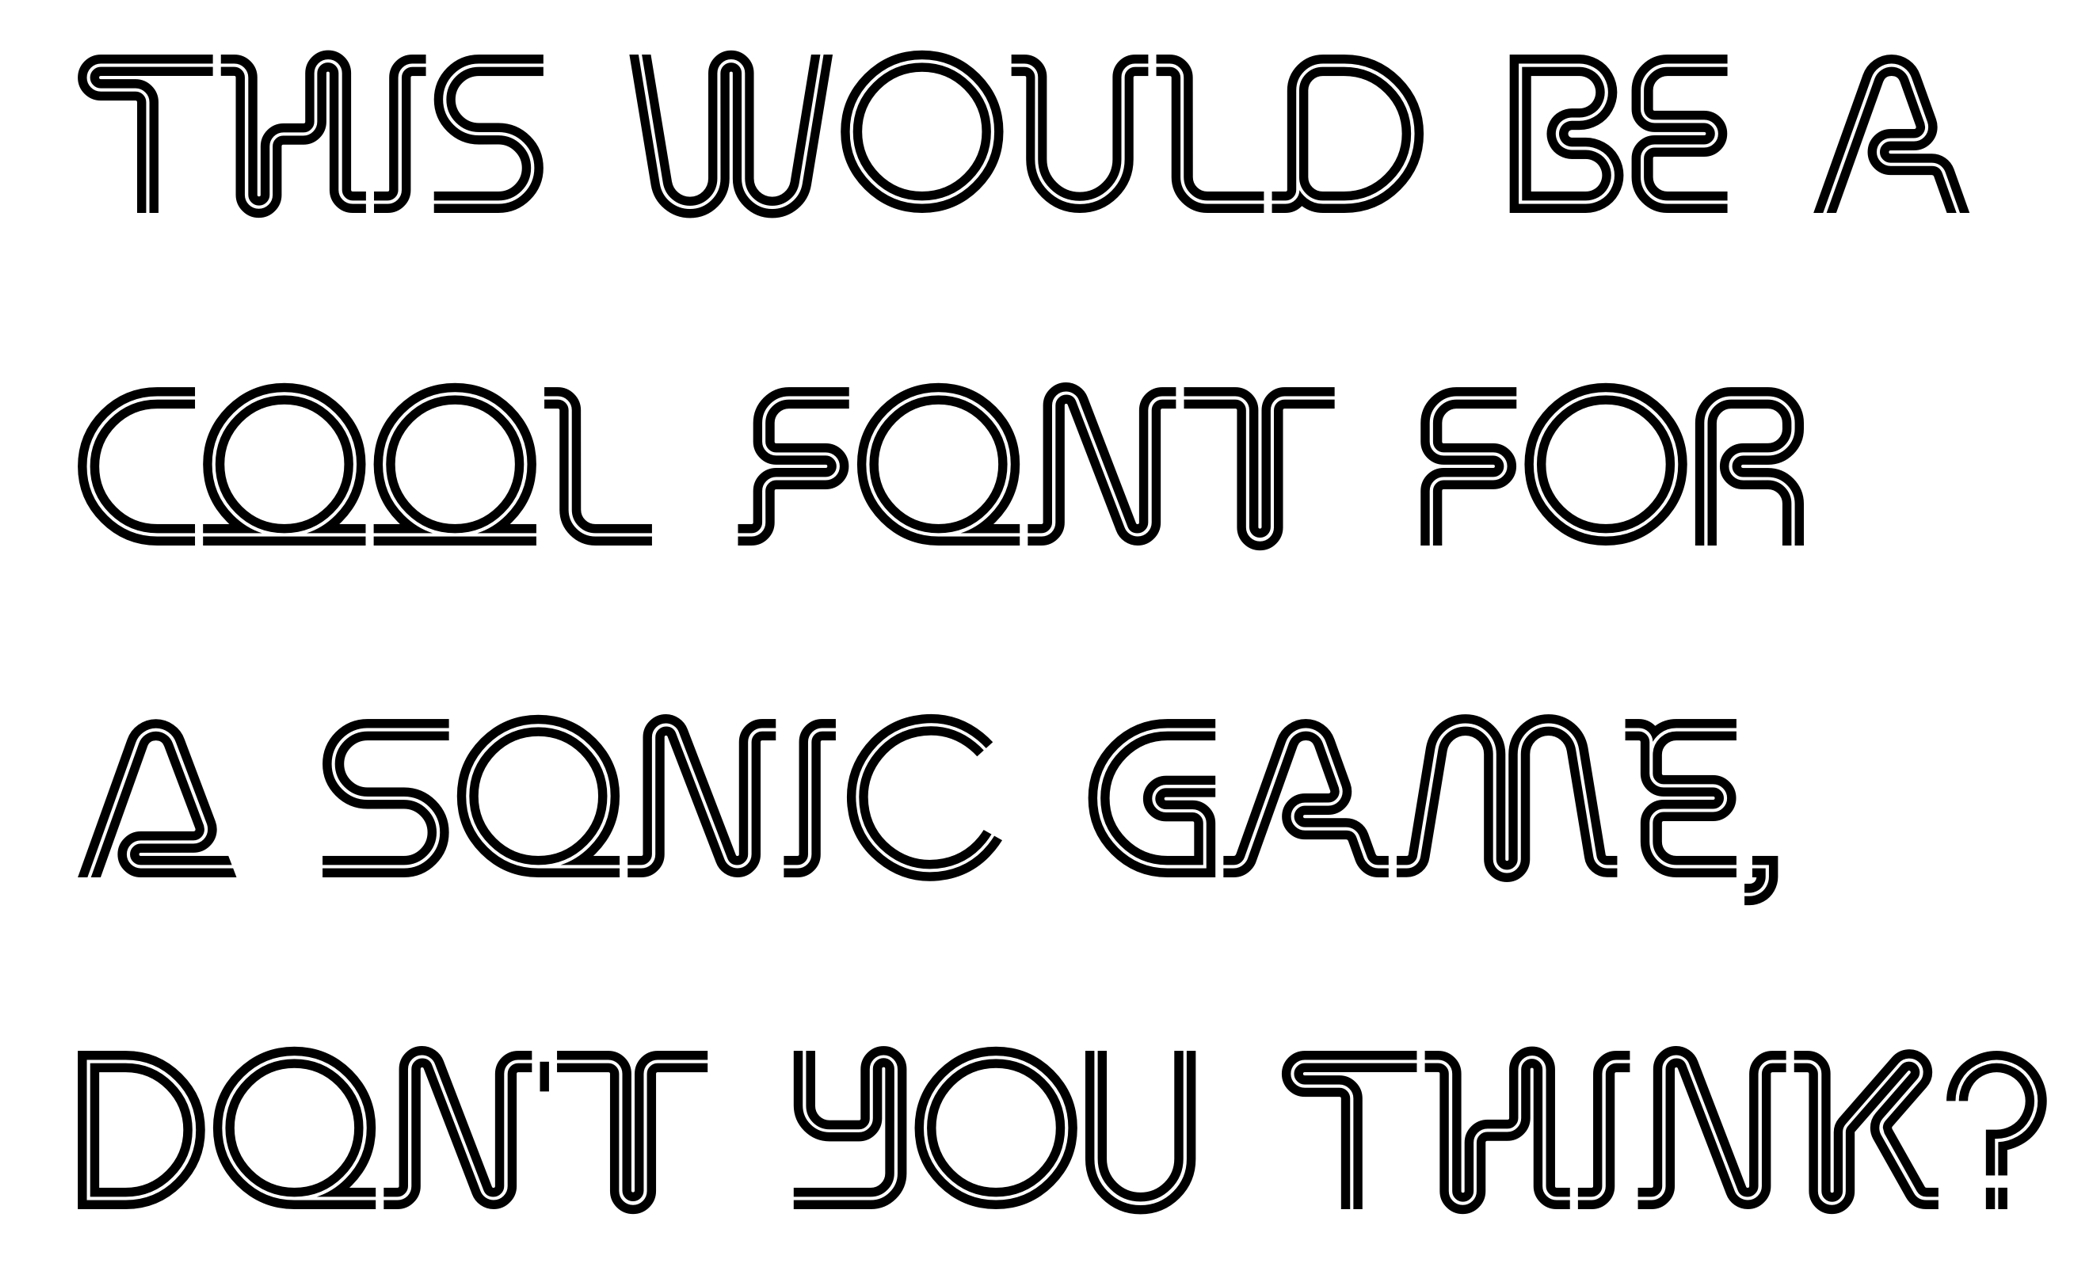 Sonic generations text font